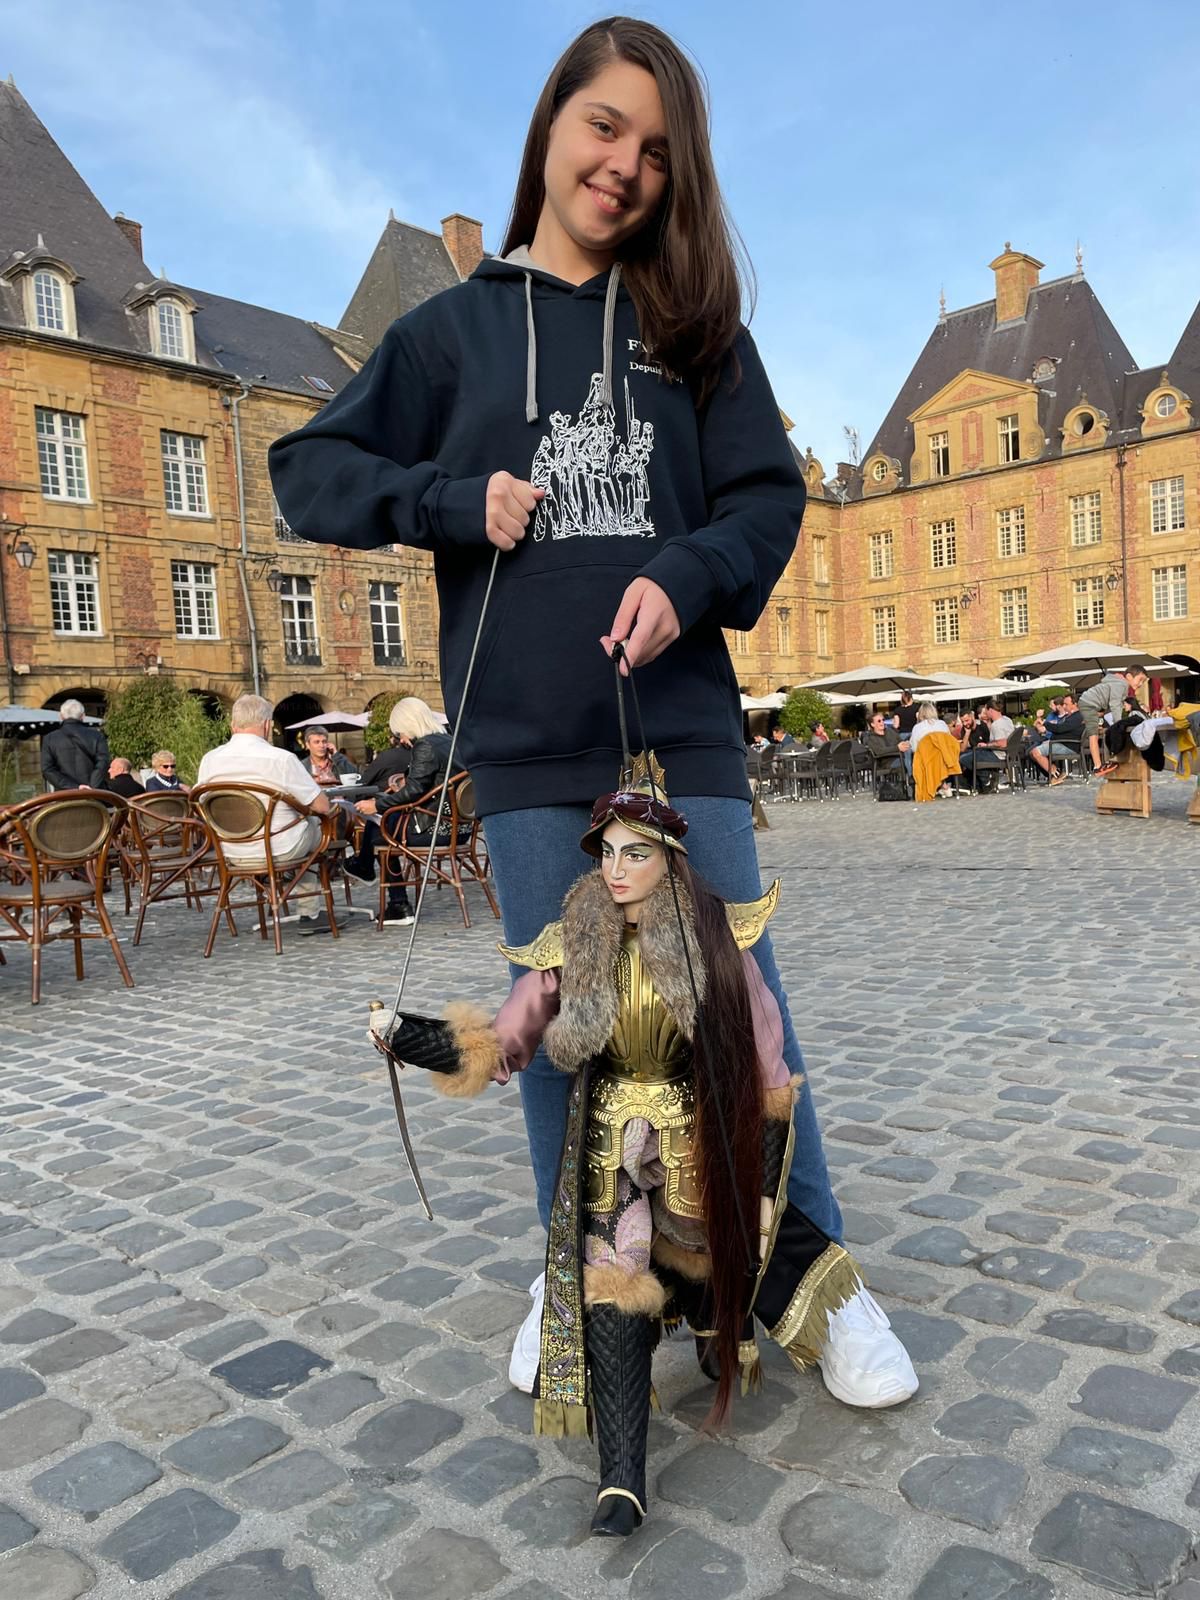 La giovanissima pupara siracusana Alessandra Mauceri incanta la Francia